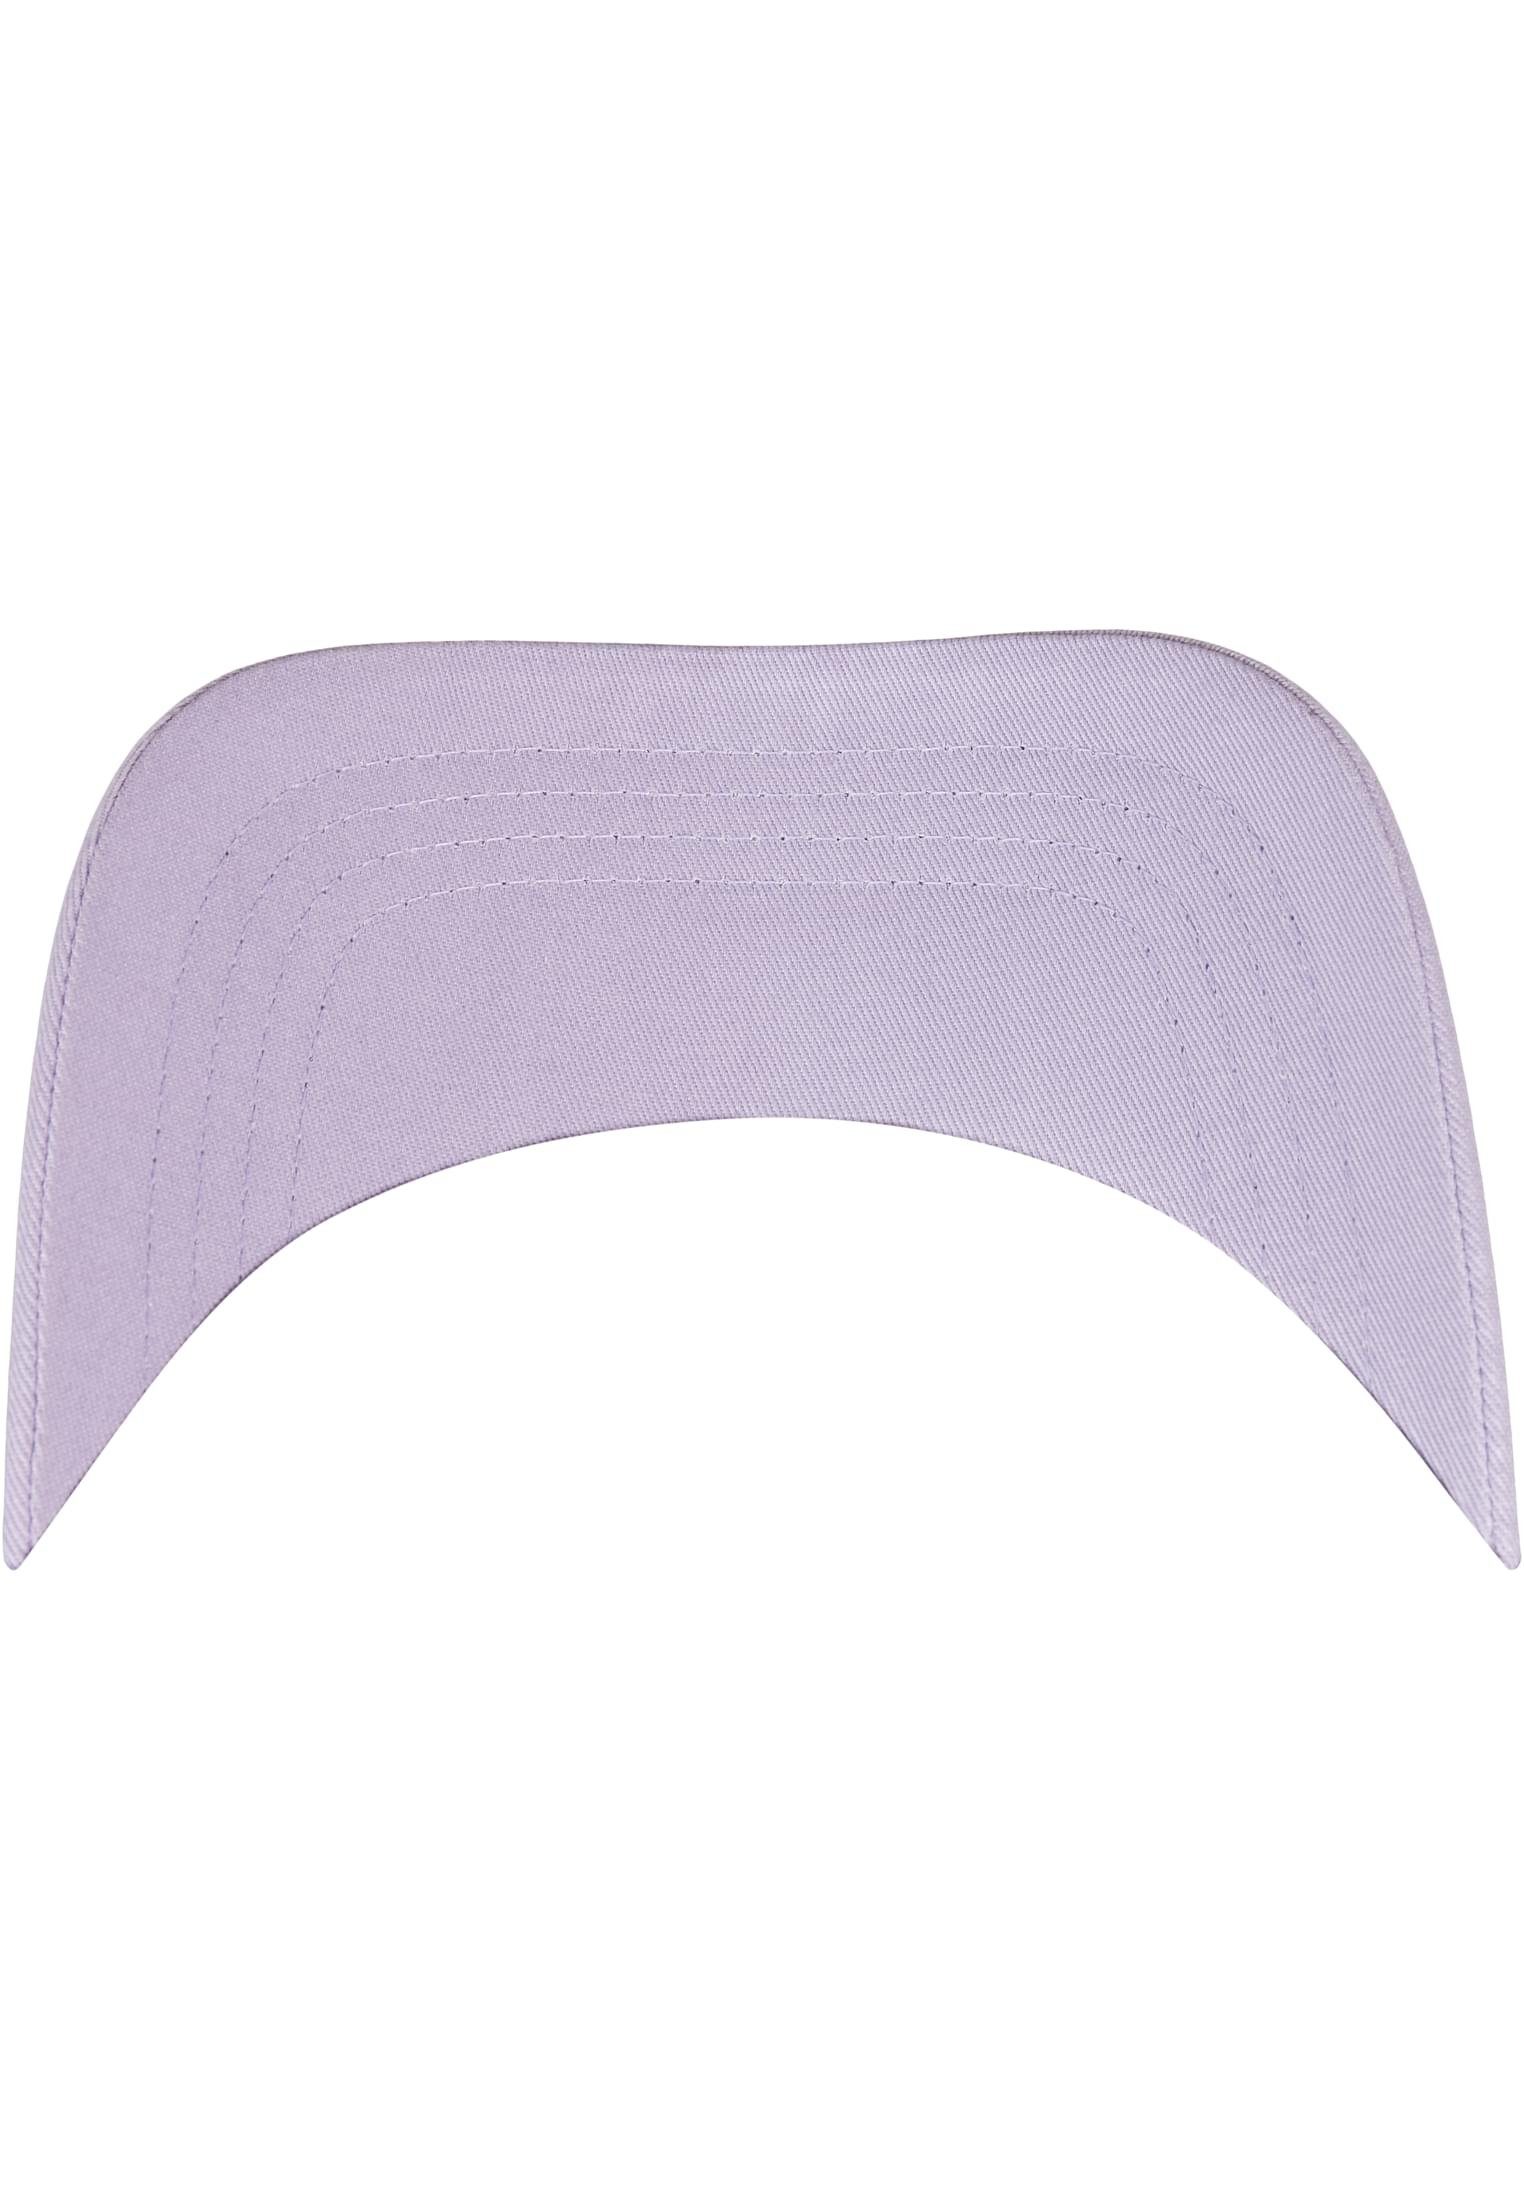 Flex Accessoires Visor Cap Cap Curved lilac Flexfit